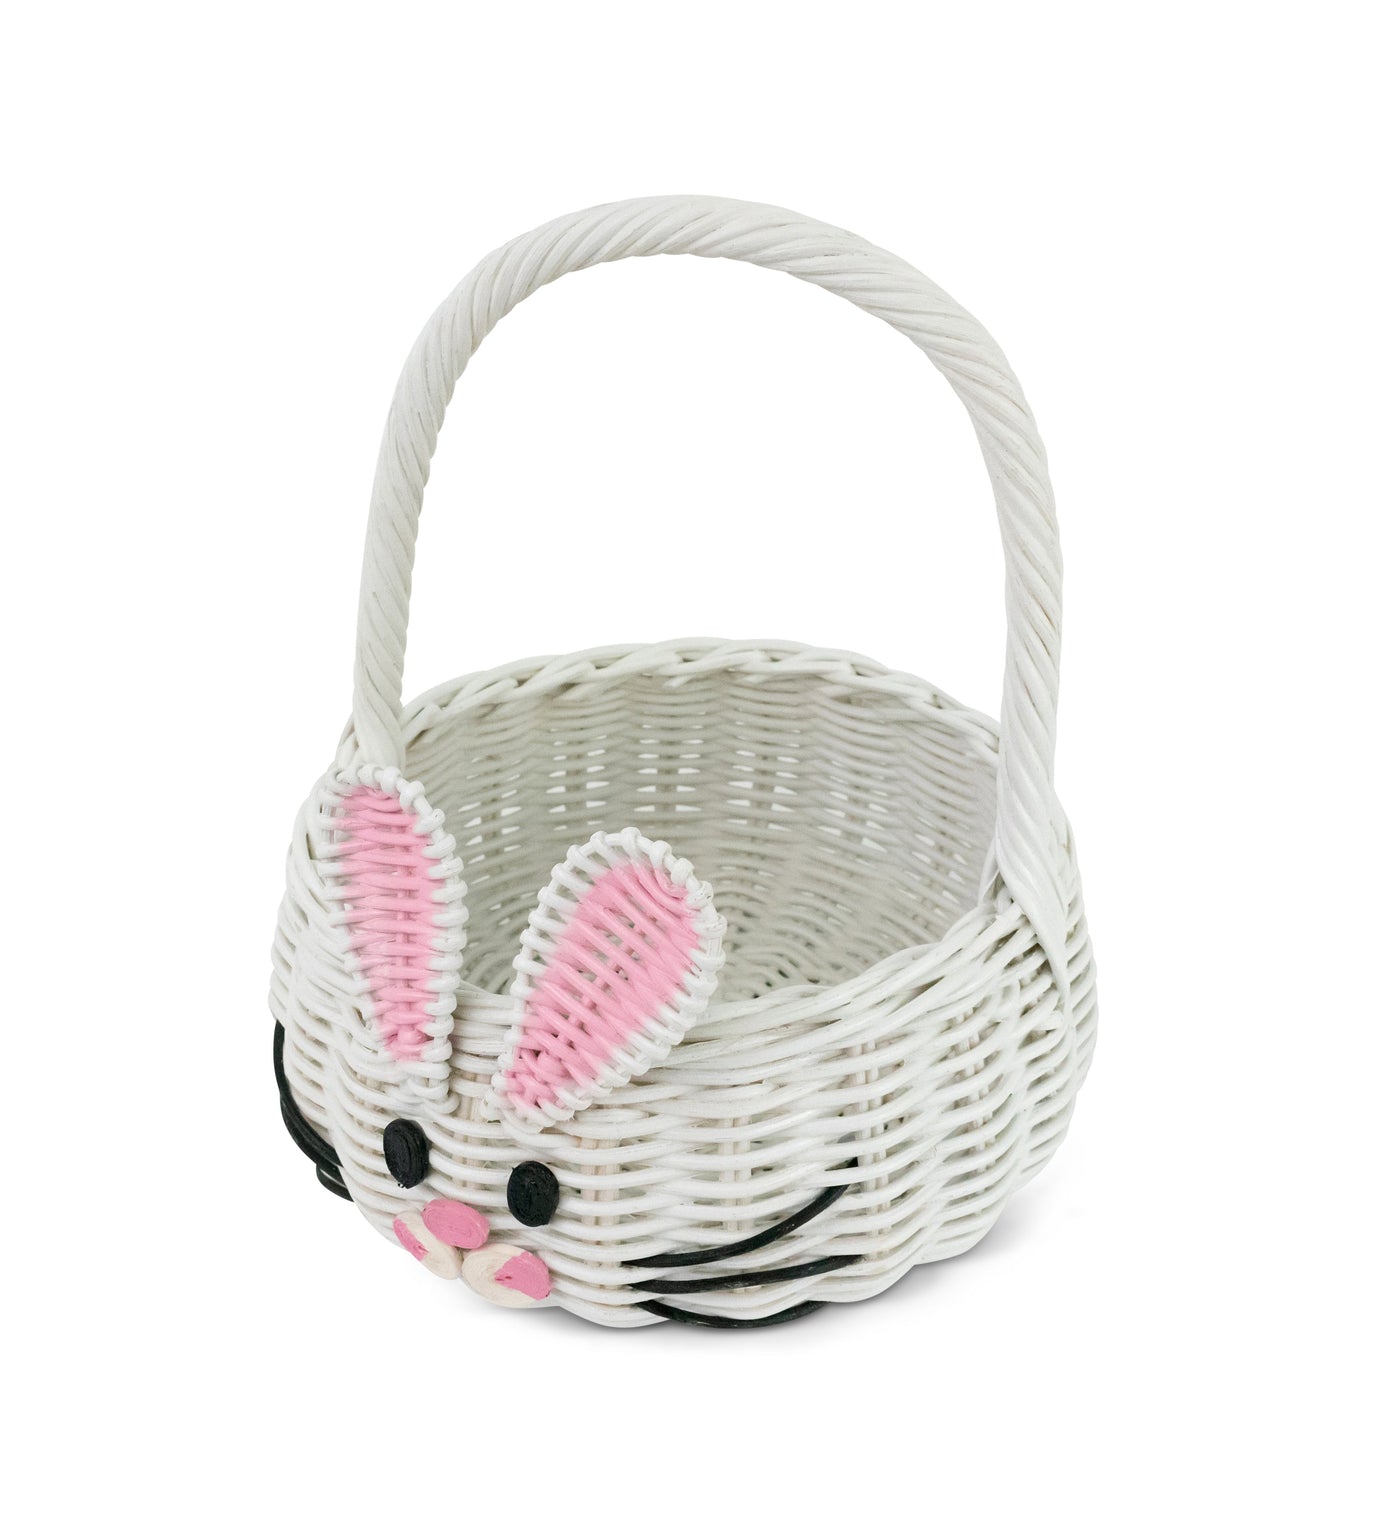 Hand Woven Bunny Rattan Wedding Flower Girl Basket Bin Home Decor Cute Handmade Handcrafted Nursery Gift Animal Storage Easter Wicker Rabbit